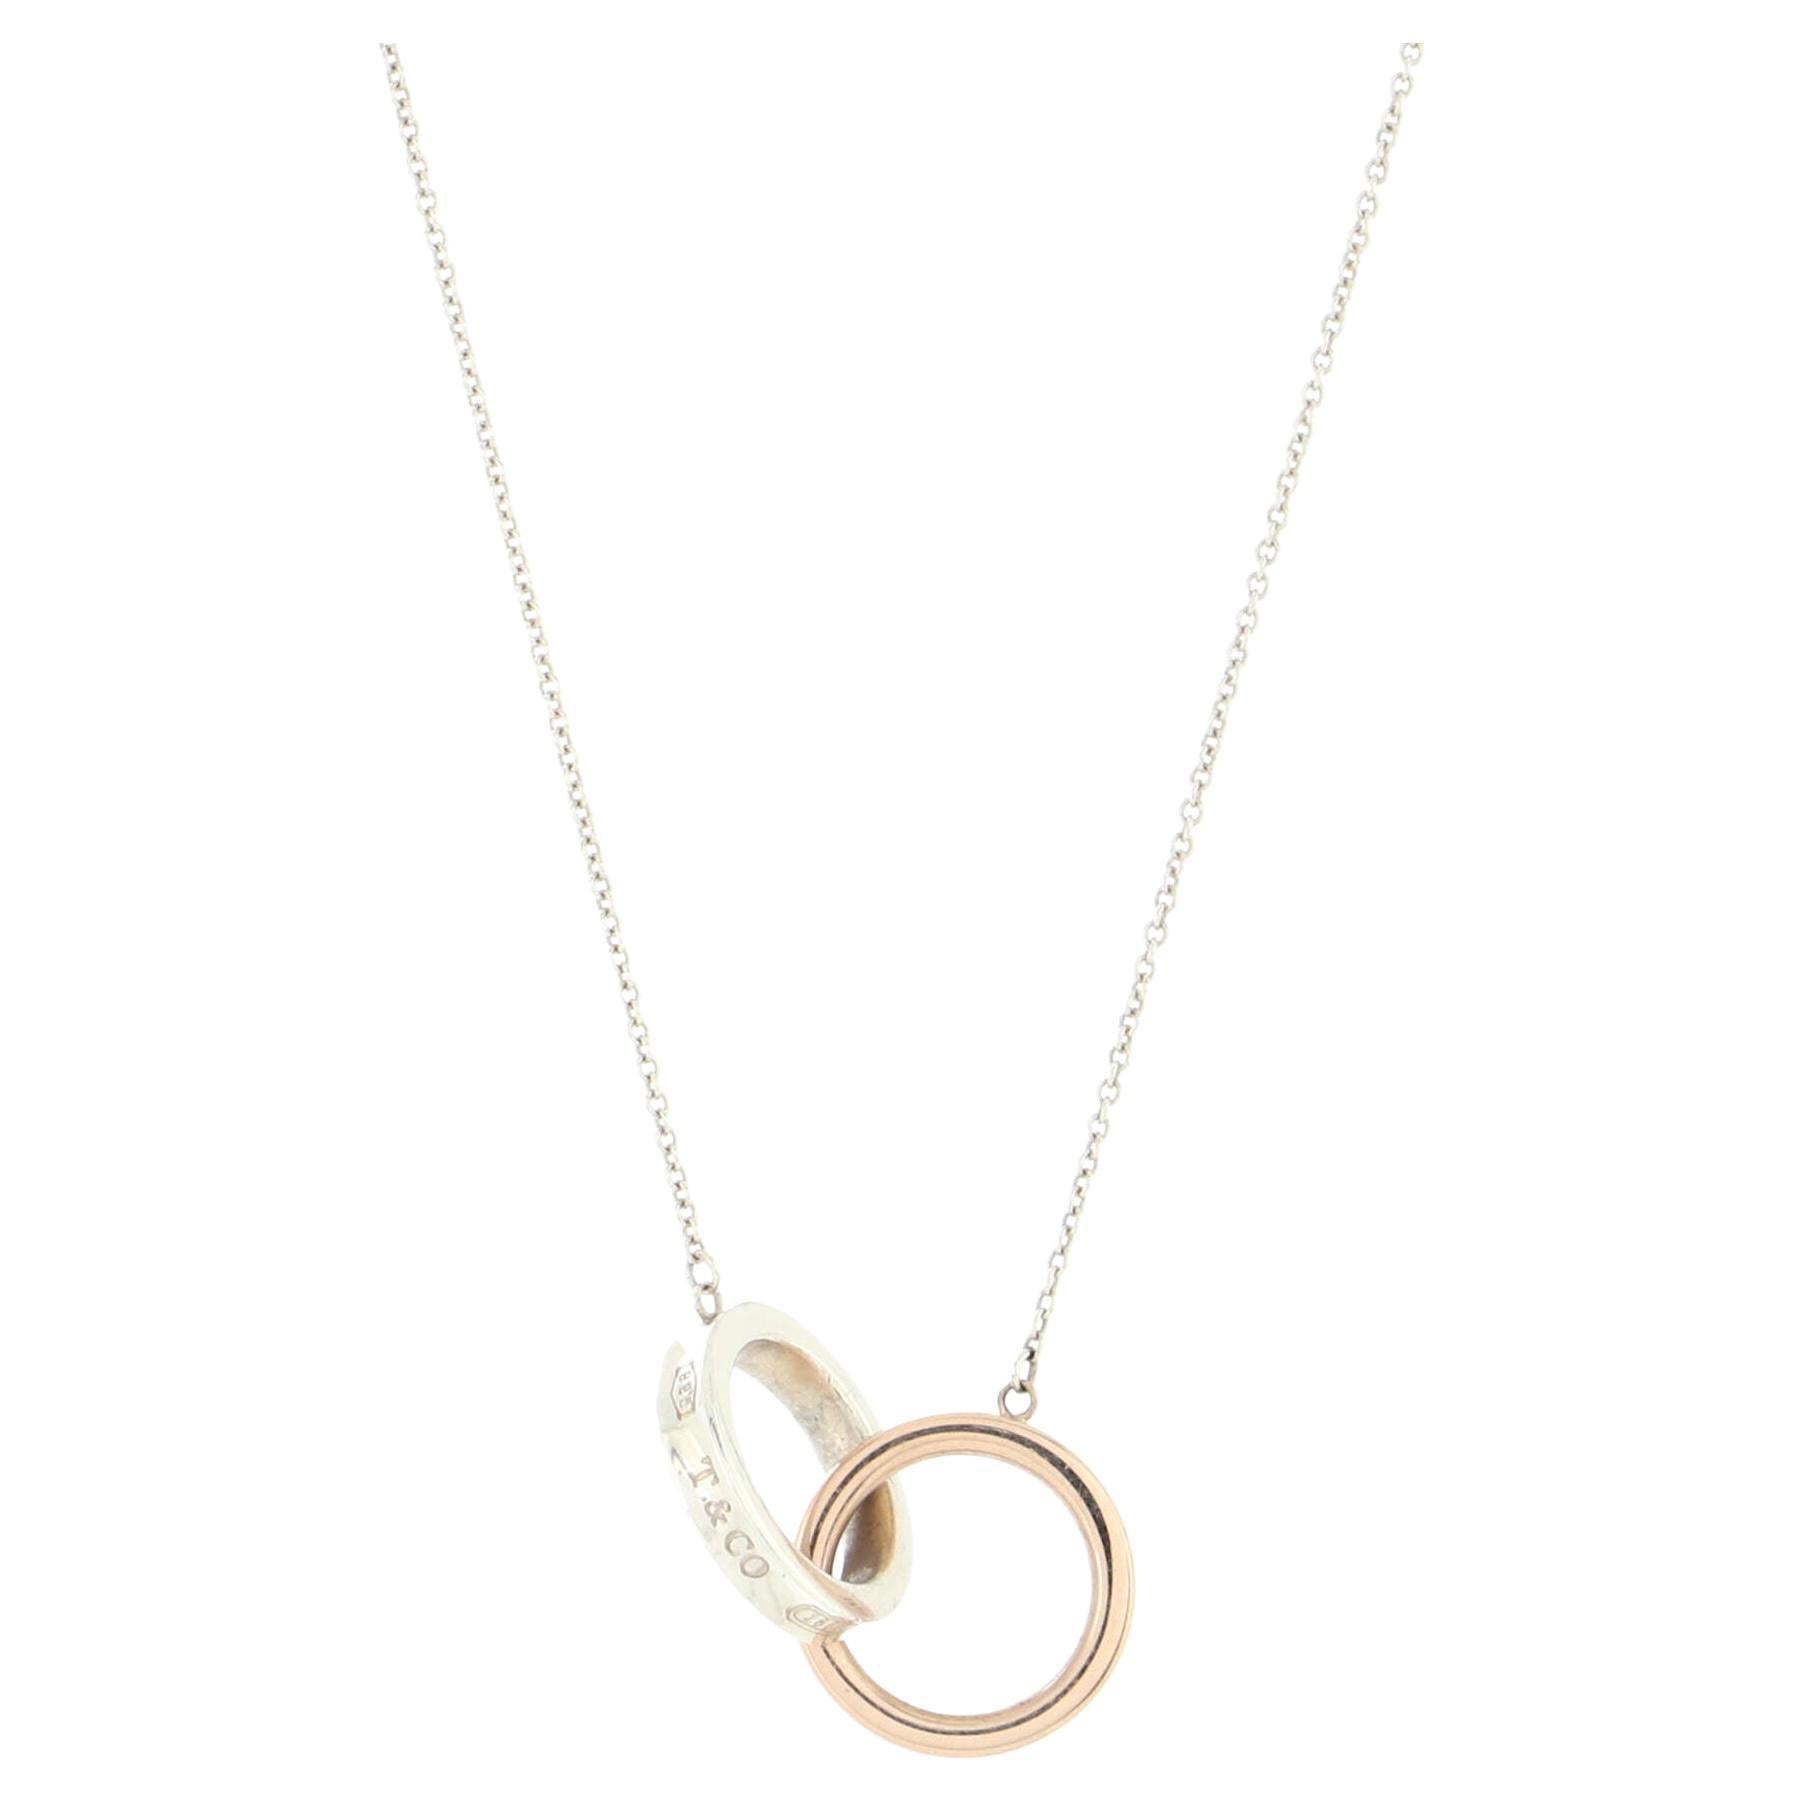 Tiffany & Co. 1837 Interlocking Circles Pendant Necklace Sterling Silver